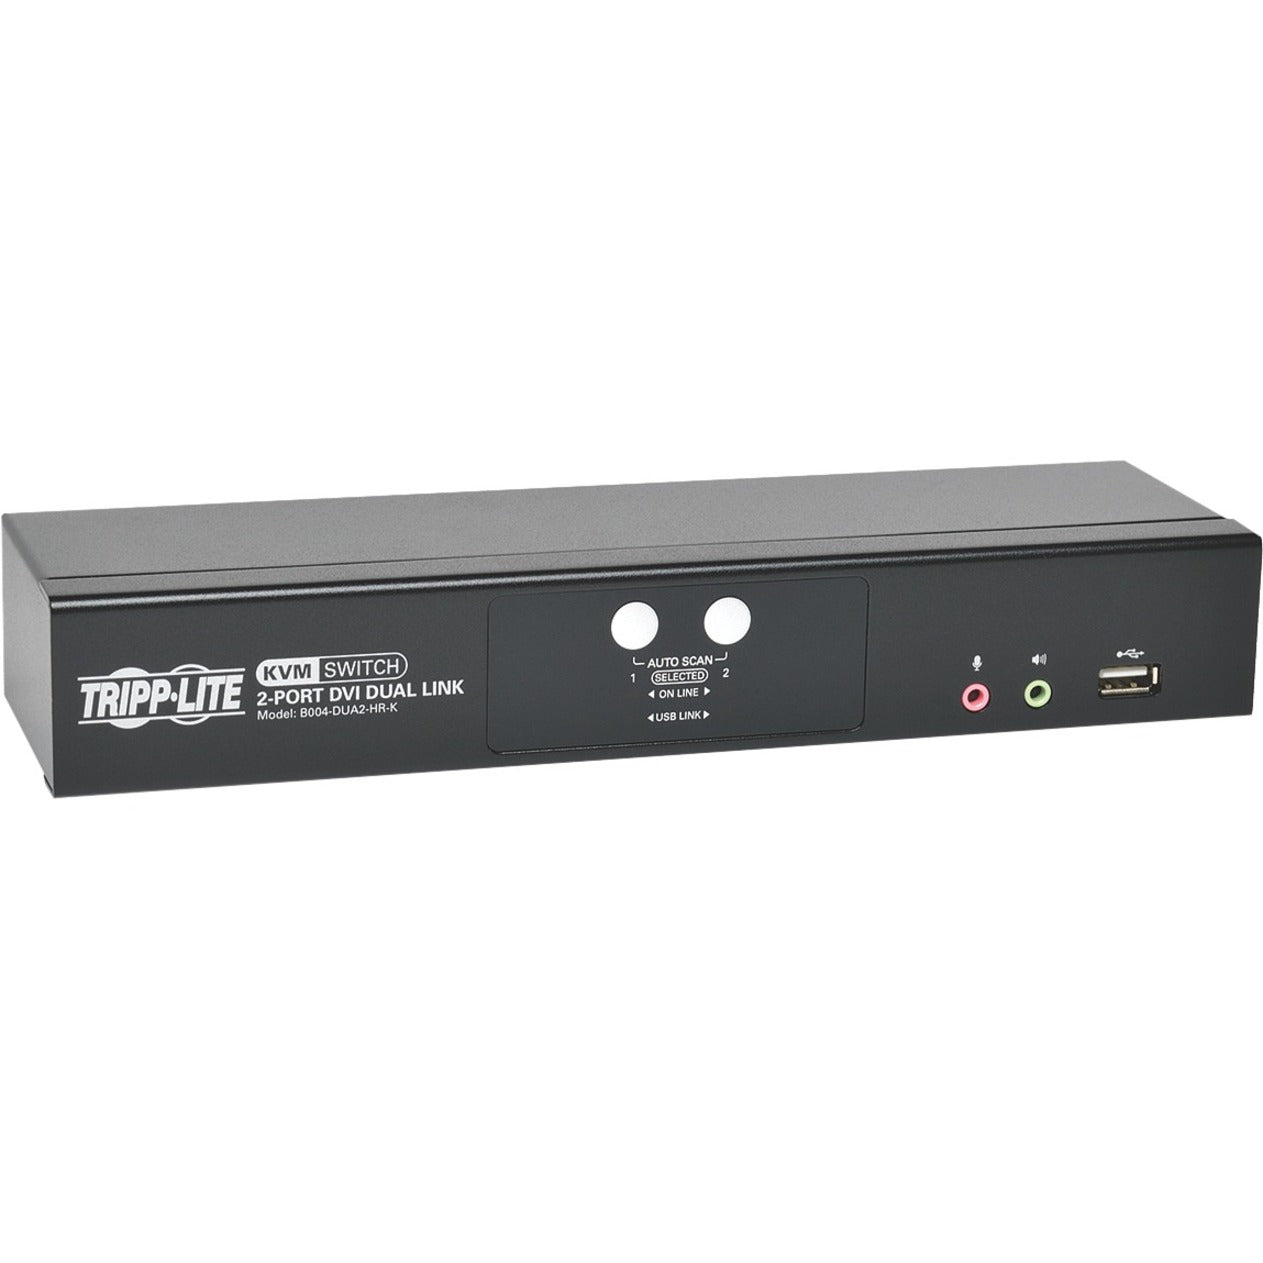 Tripp Lite B004-DUA2-HR-K 2-端口DVI双链路/USB KVM切换器带音频和电缆，WQUXGA，2560 x 1600，TAA合规，3年保修 特力品